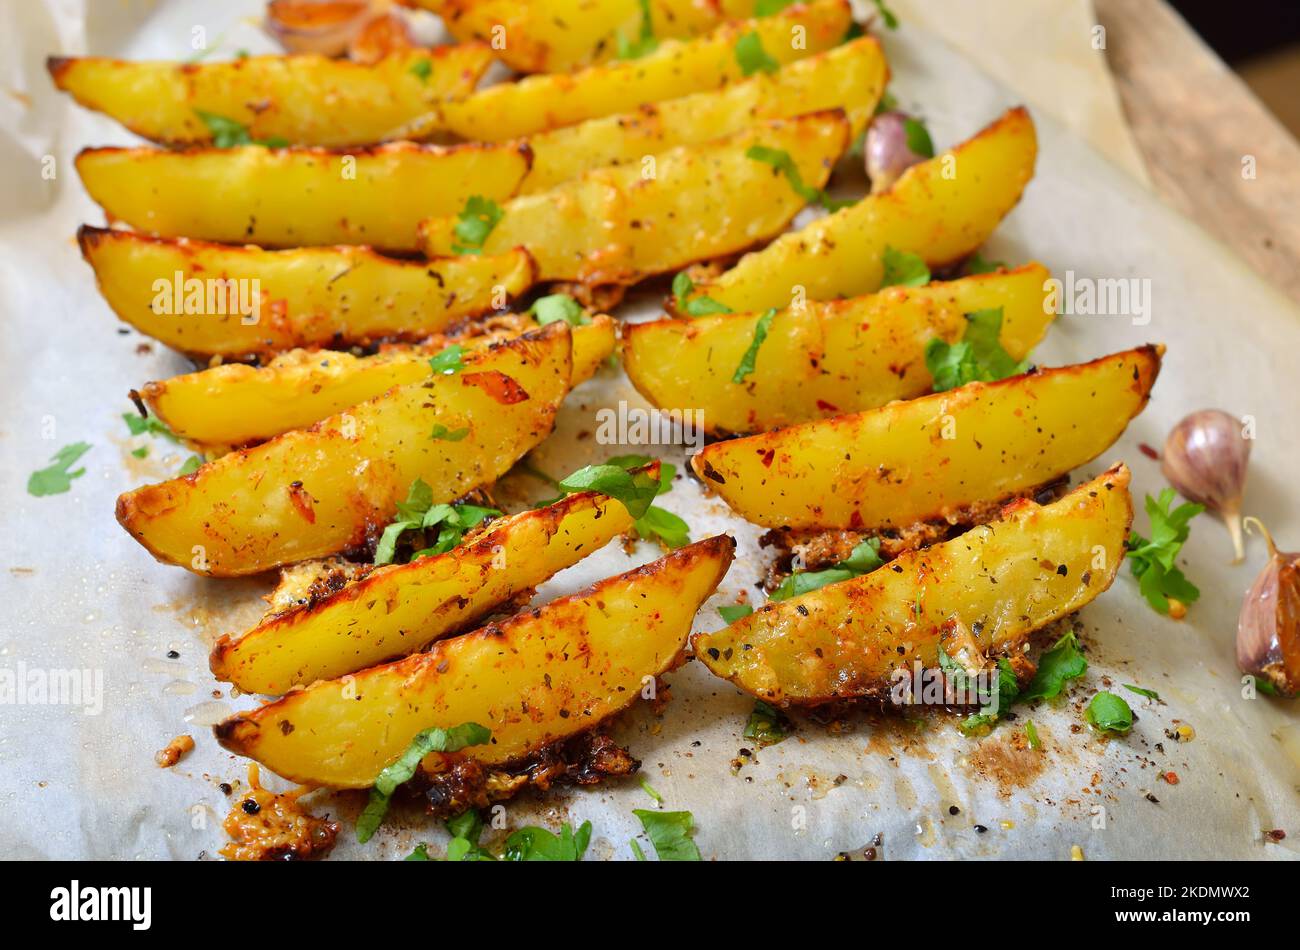 Roasted potato wedges with parsley Stock Photo